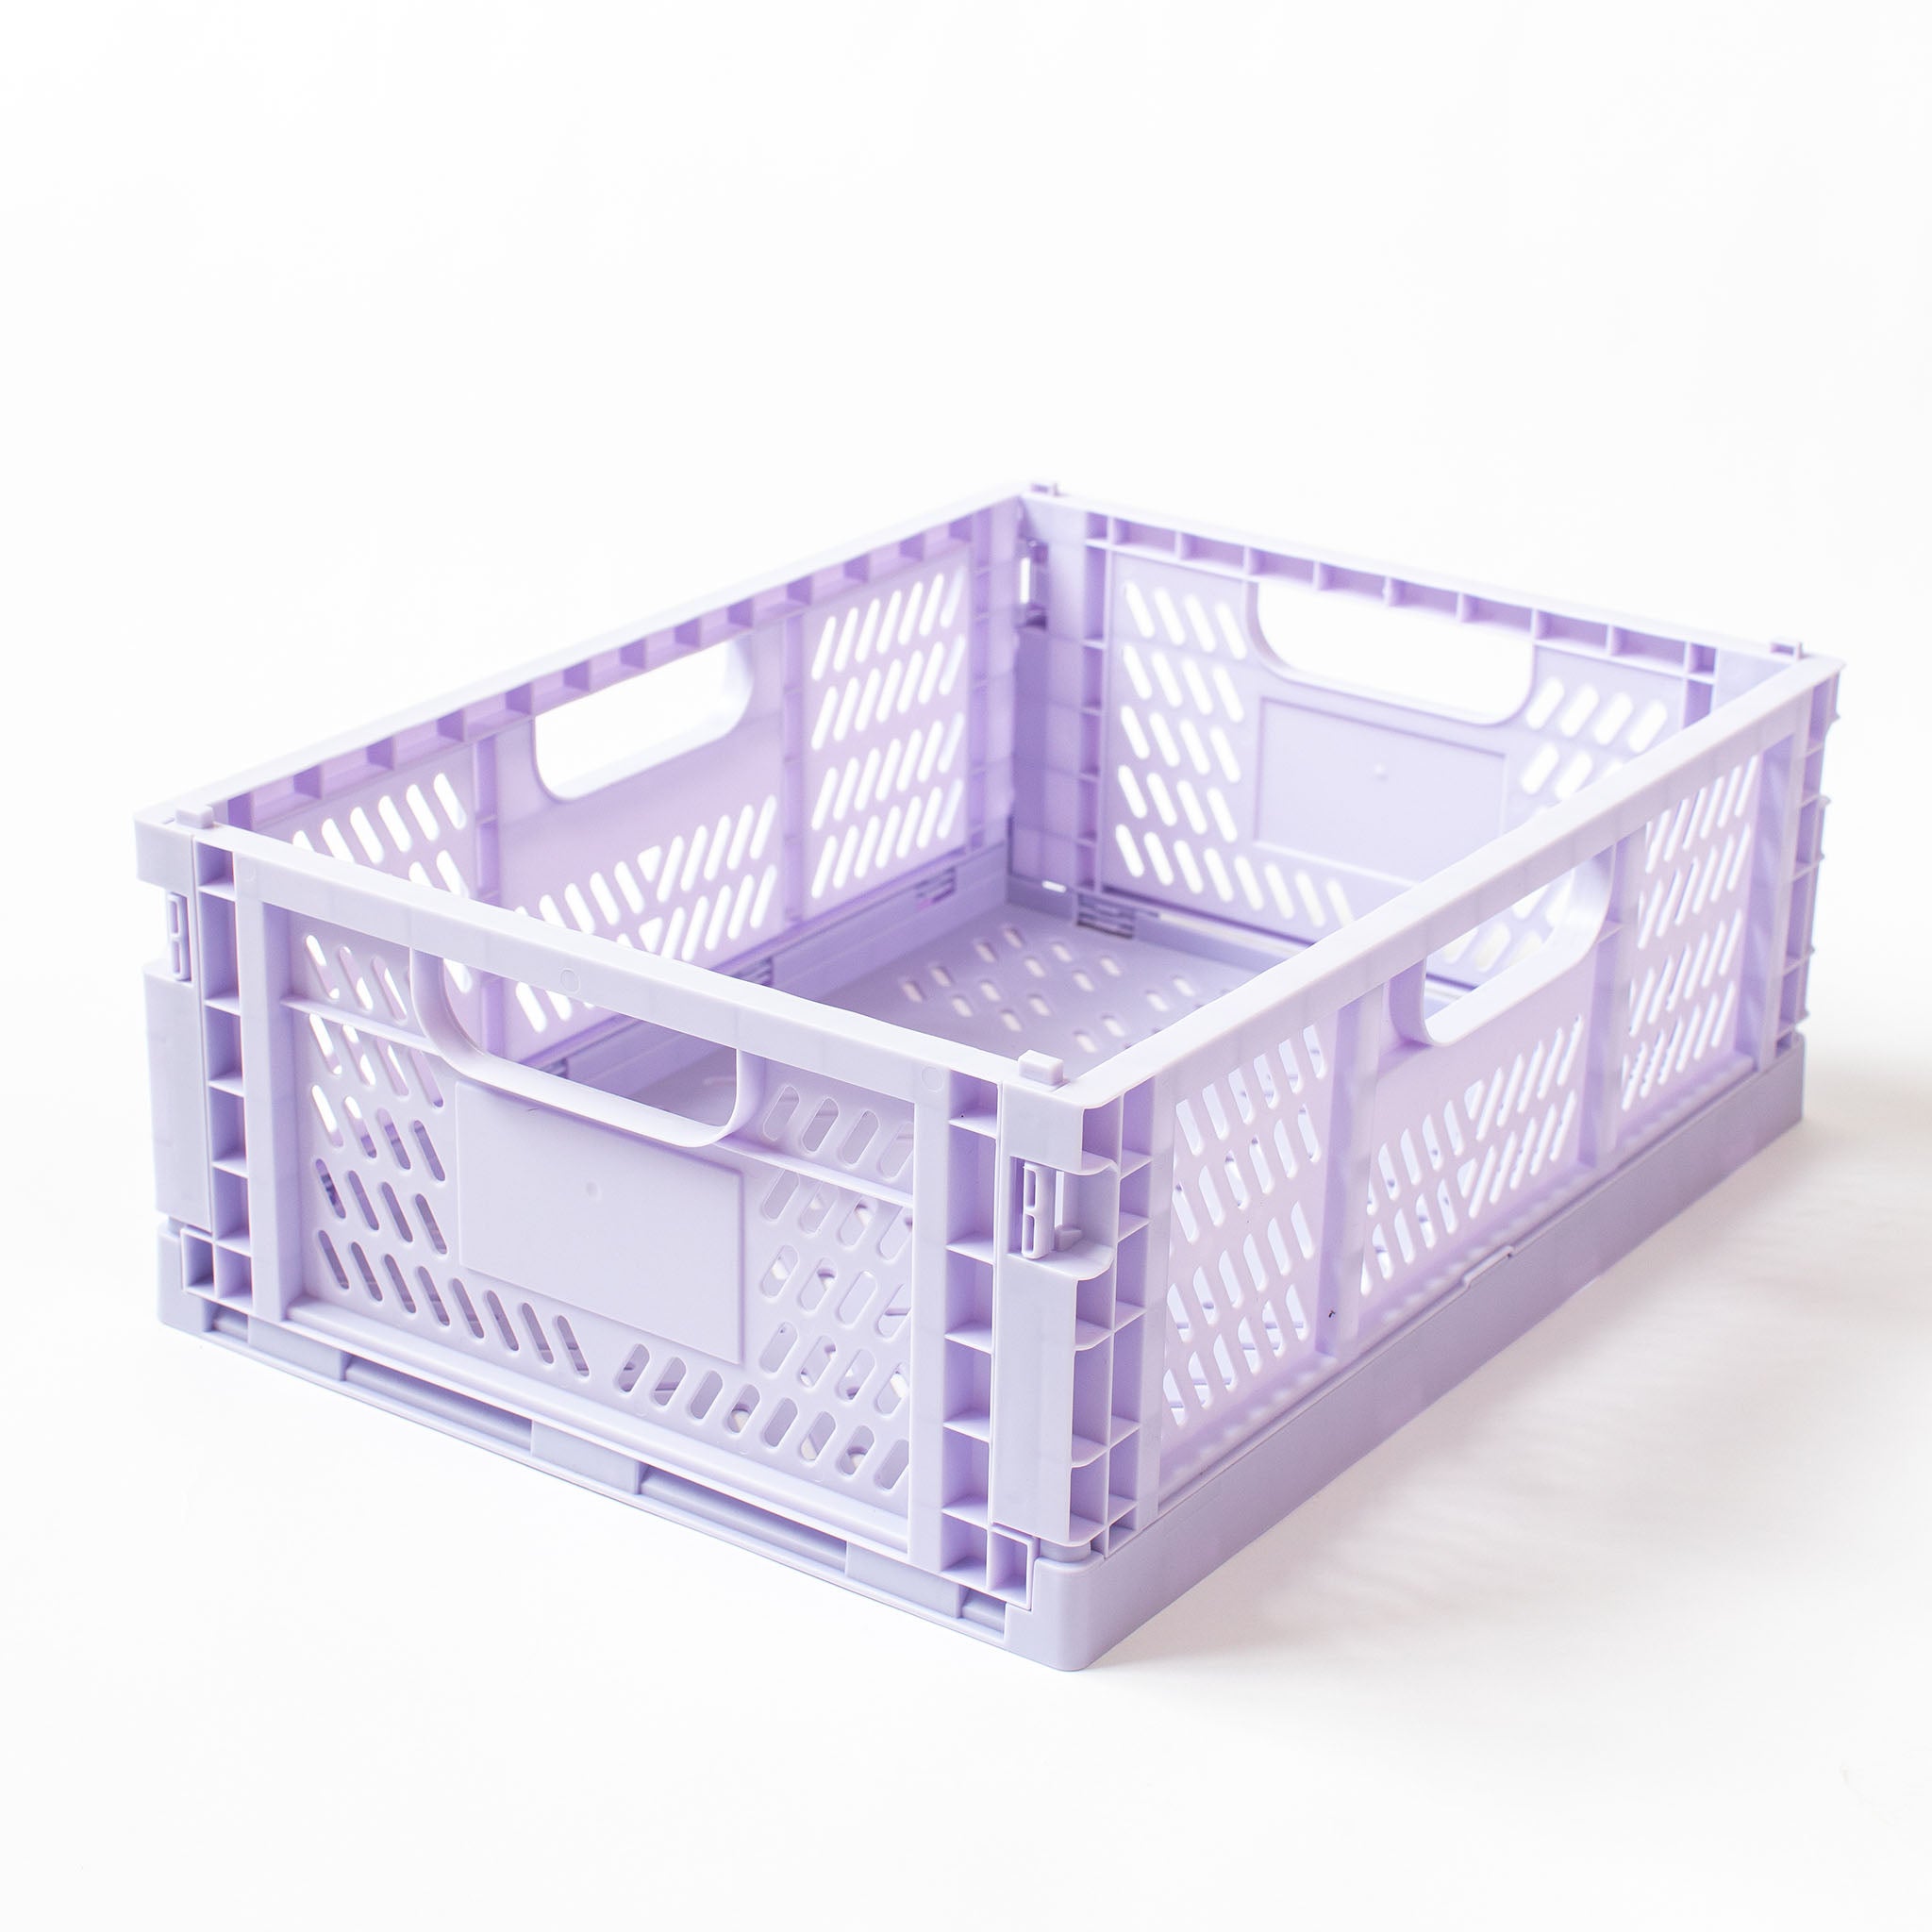 Large Storage Crate, Lavender, Set of 2